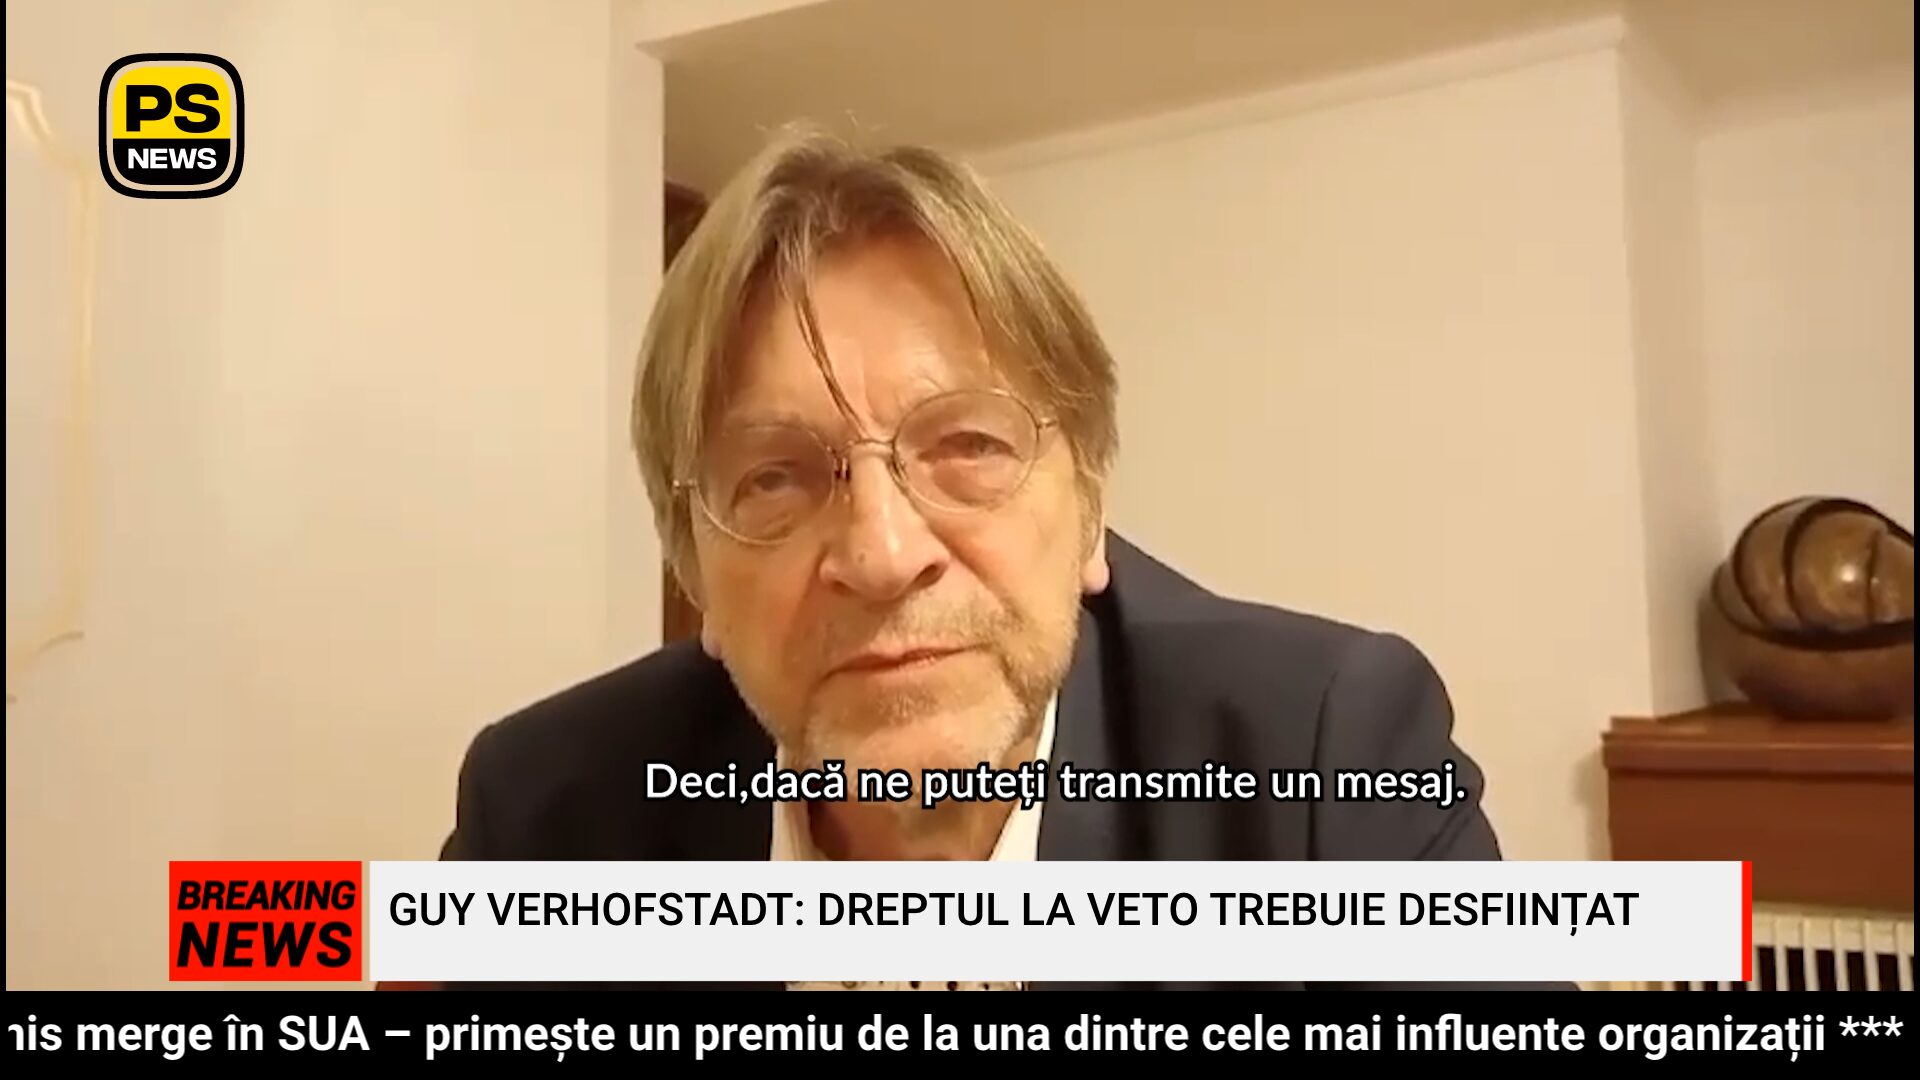 PS News TV | Guy Verhofstadt, în exclusivitate pentru PS News: Dreptul de veto trebuie desființat